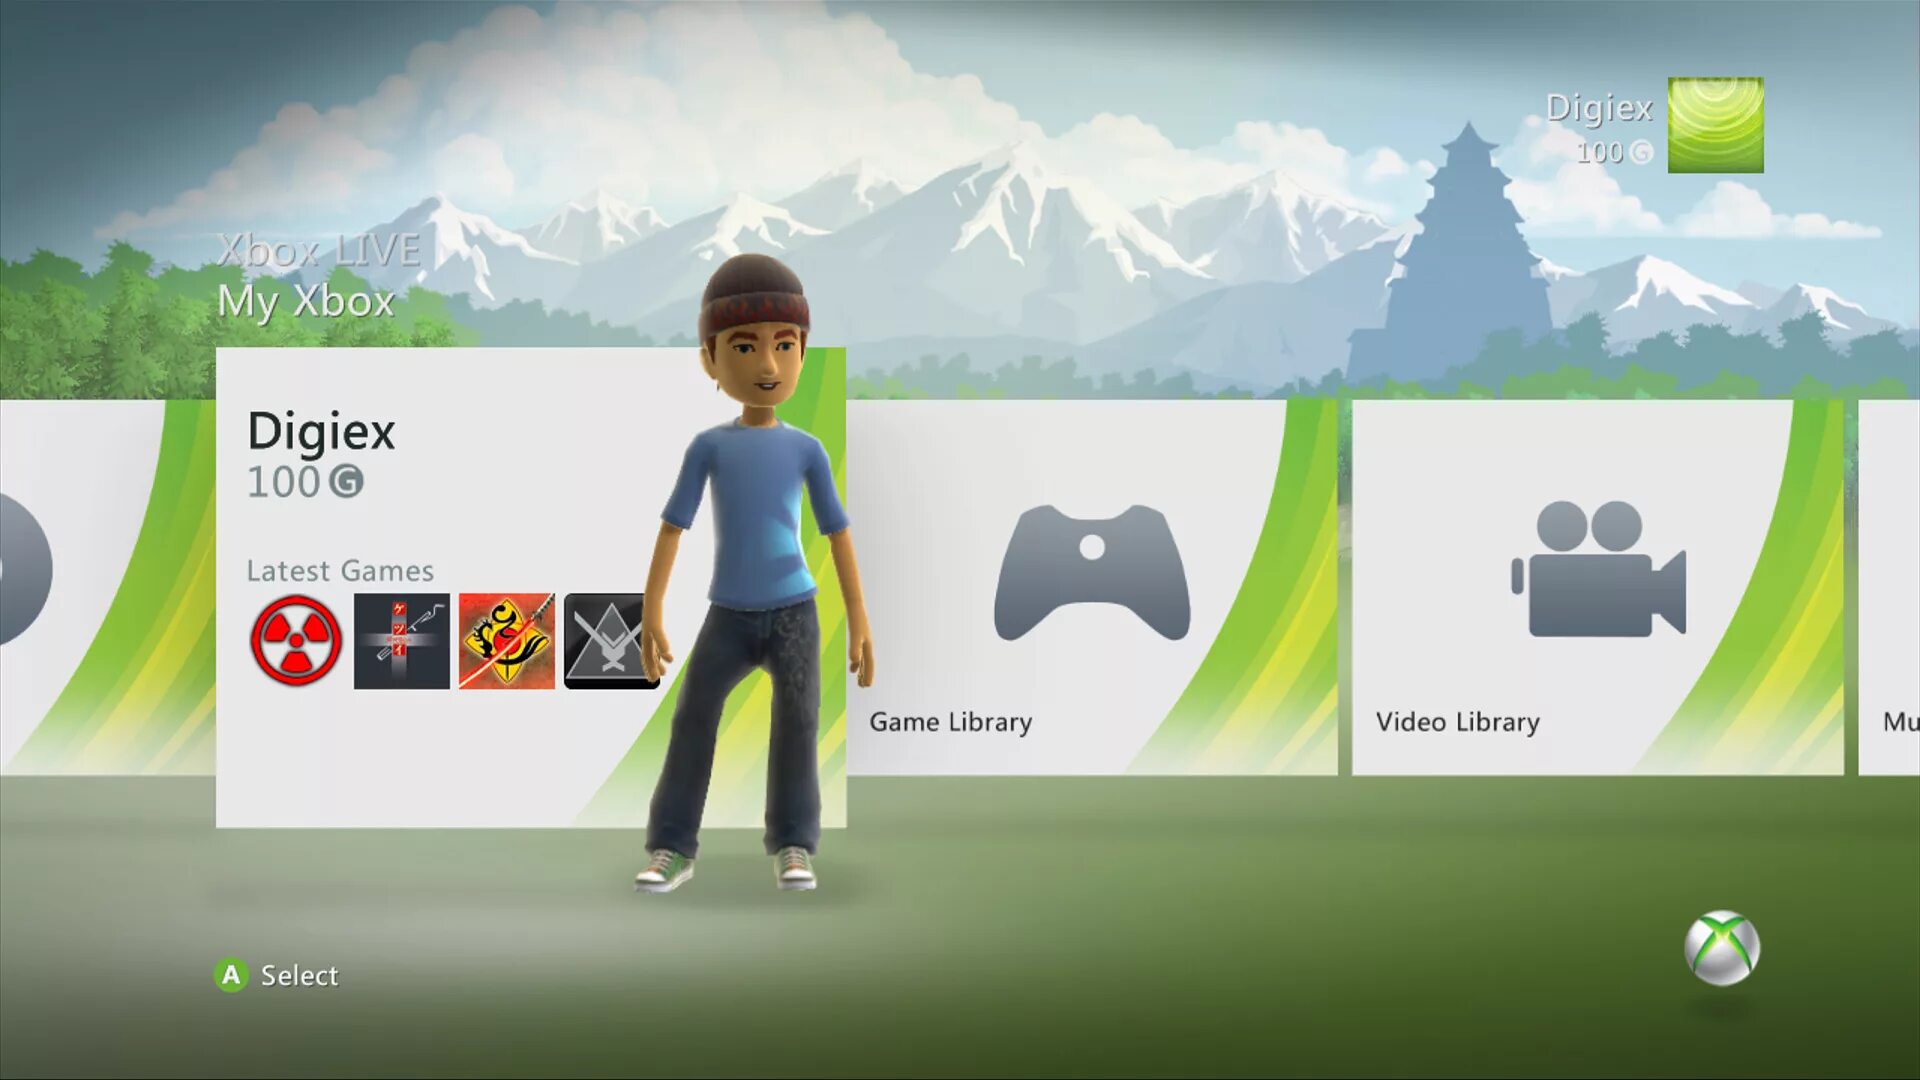 Фрибут Xbox 360 экран. Xbox 360 freeboot меню. Скины Xbox 360. Dashboard Xbox 360 freeboot.